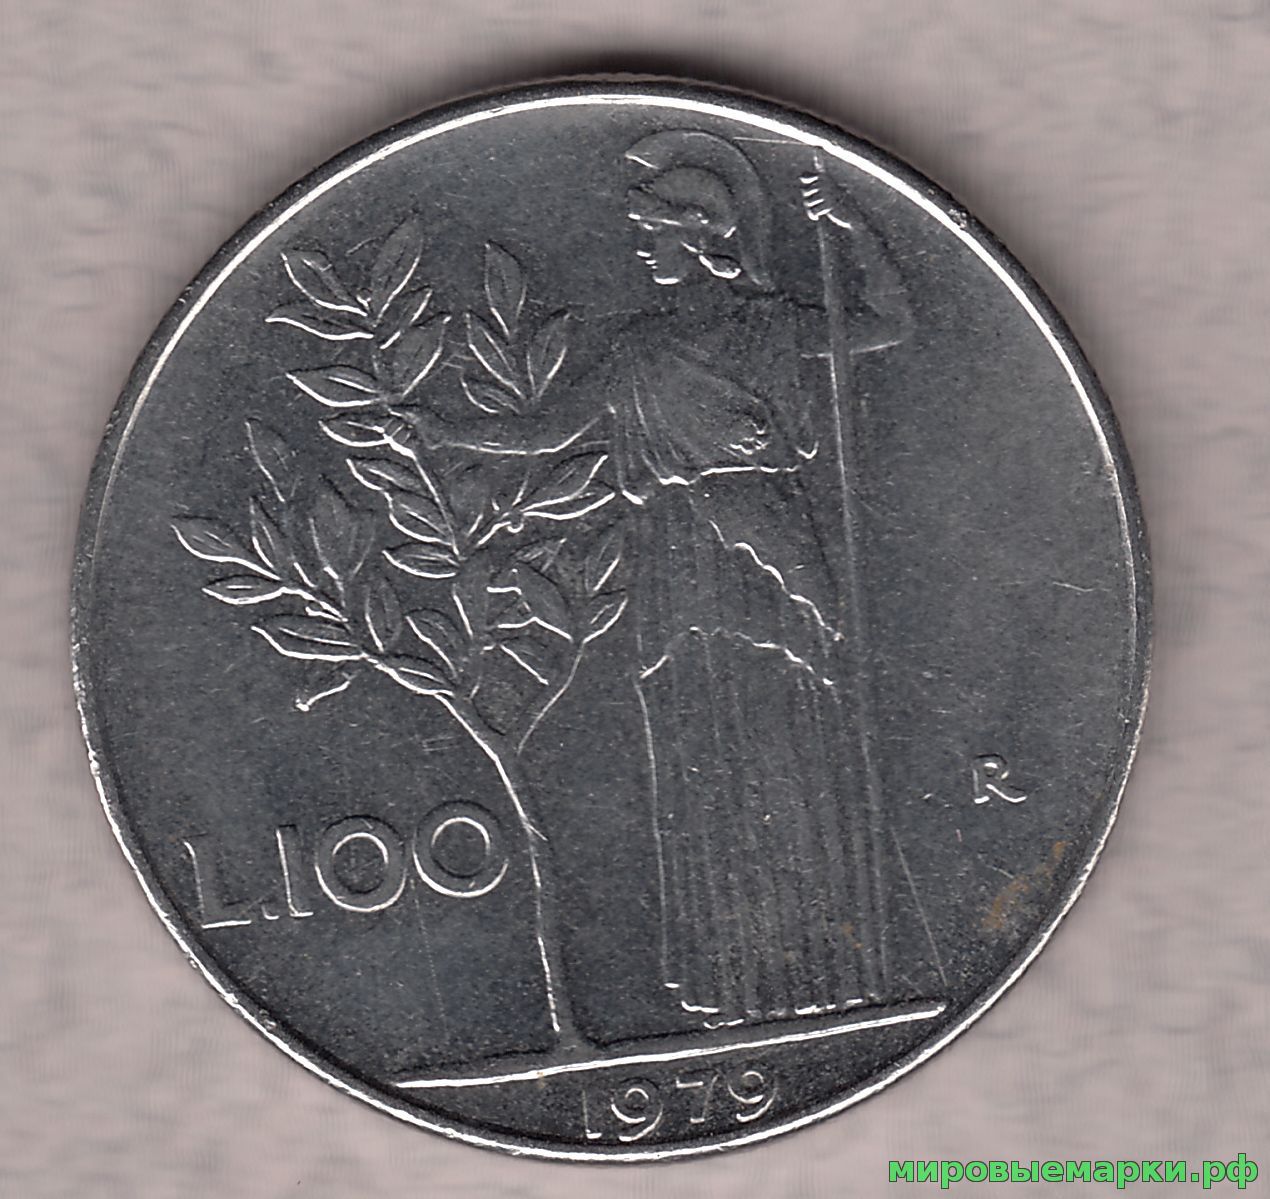 Италия 1970-е г. 100 лир, UNC(мешковые)